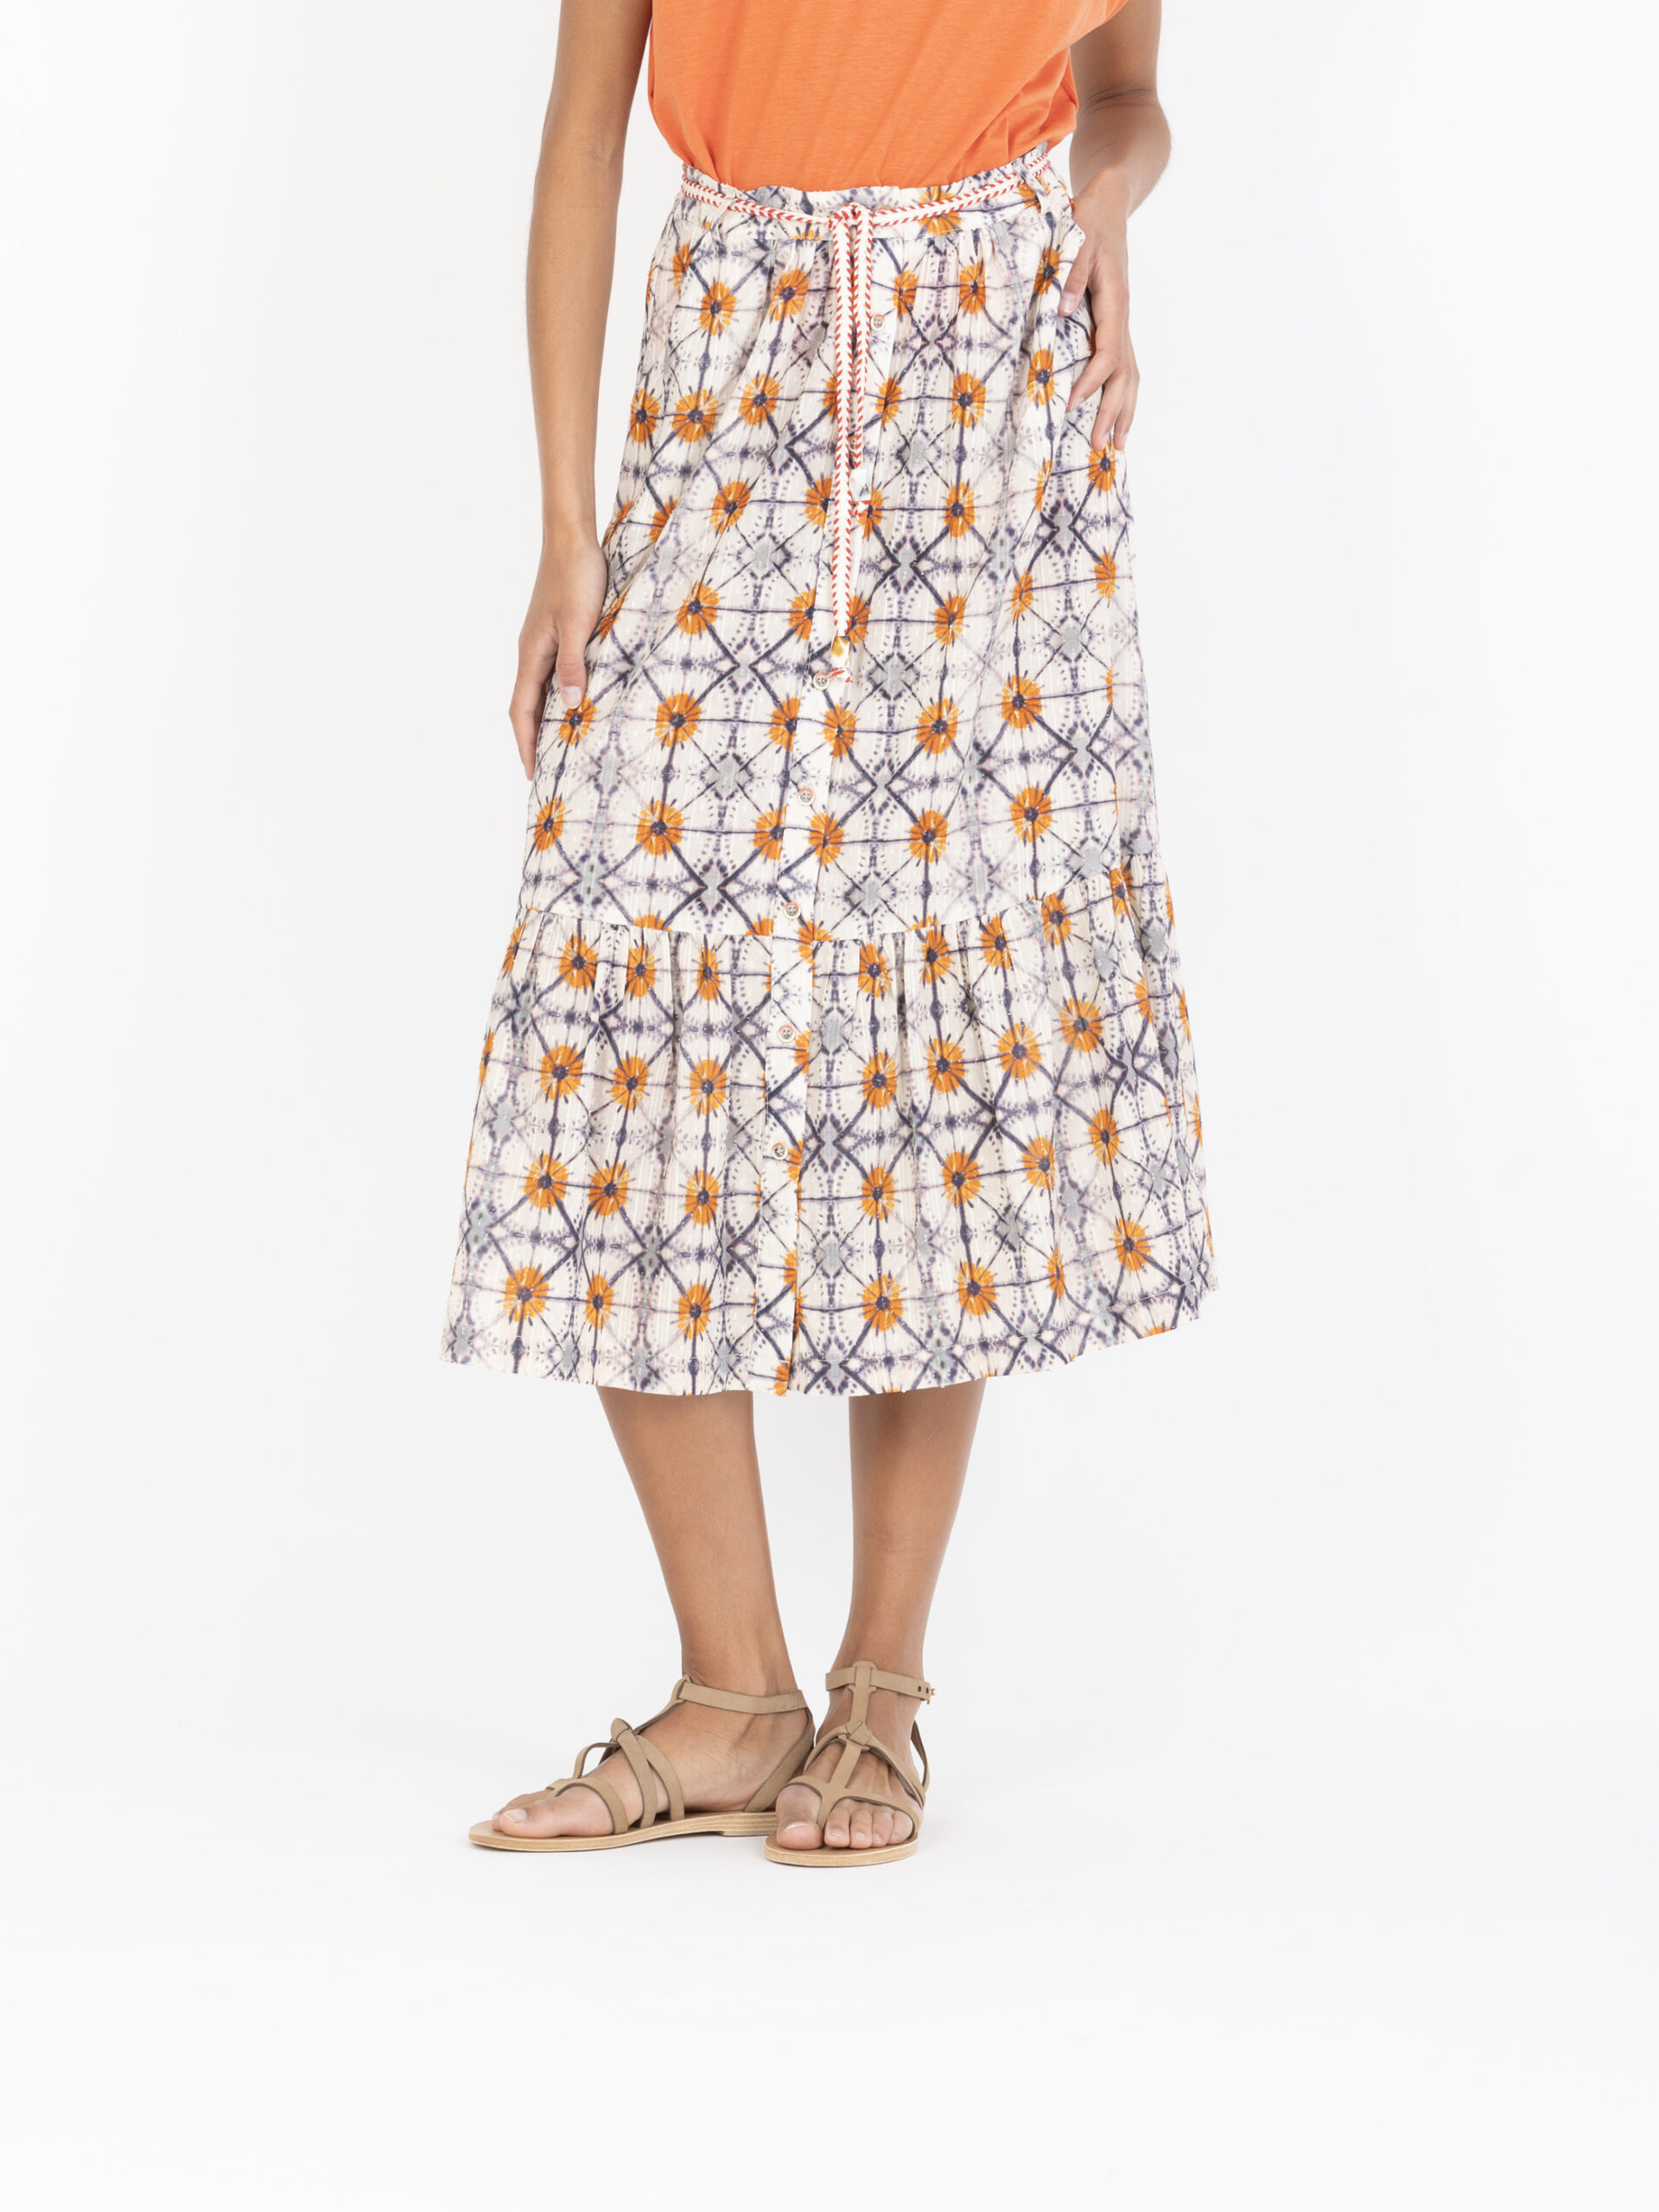 journal-skirt-floral-side-pockets-belt-ruffle-lapetitefrancaise-matchboxathens